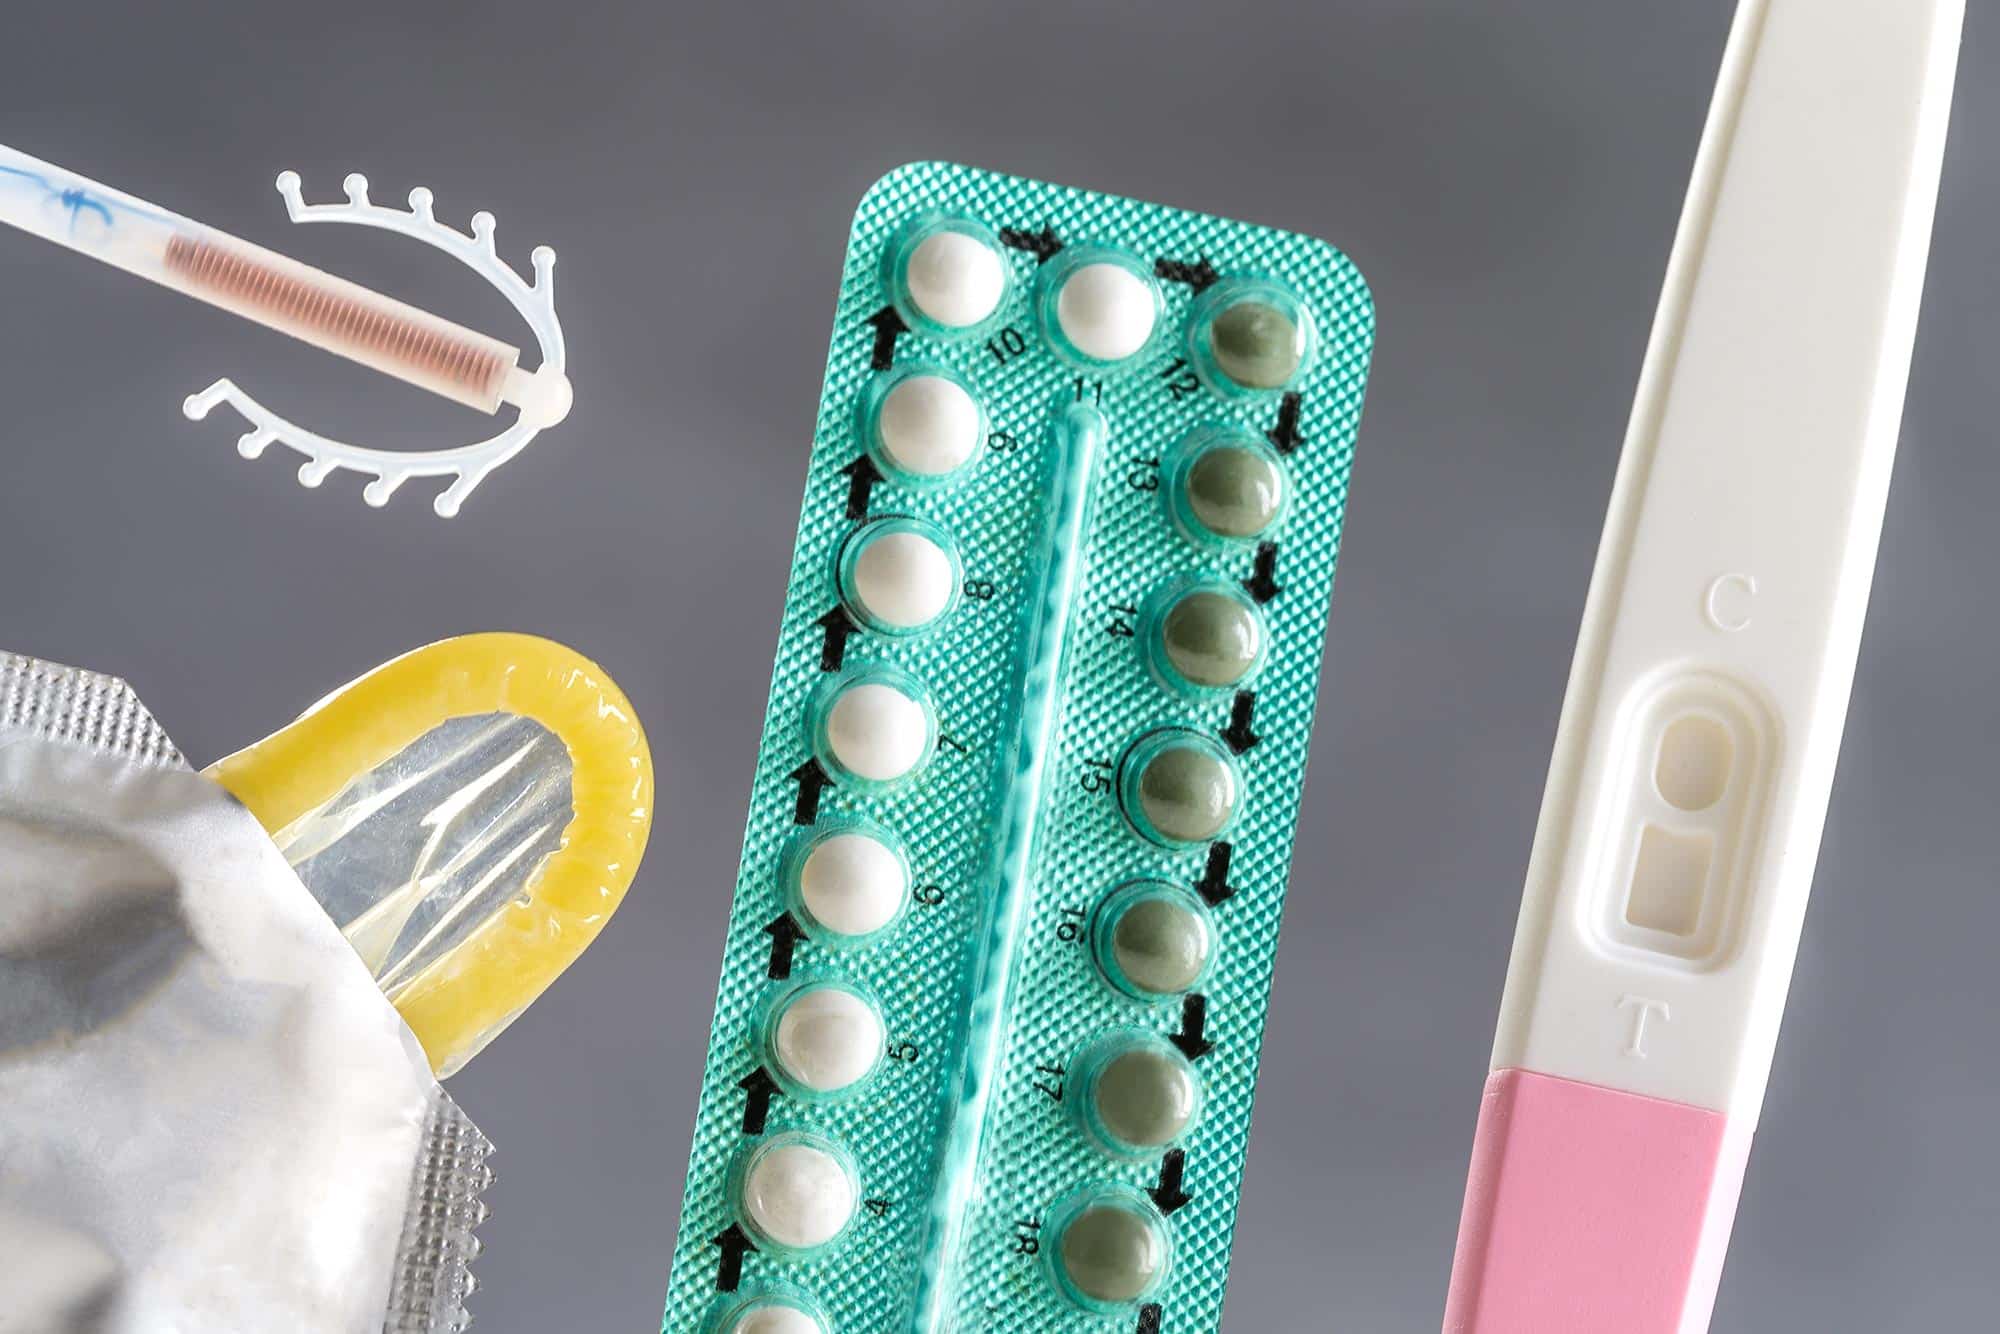 Formation contraception, pilules oestroprogestatives, microprogestatives, dispositifs intra-utérins, stérilet